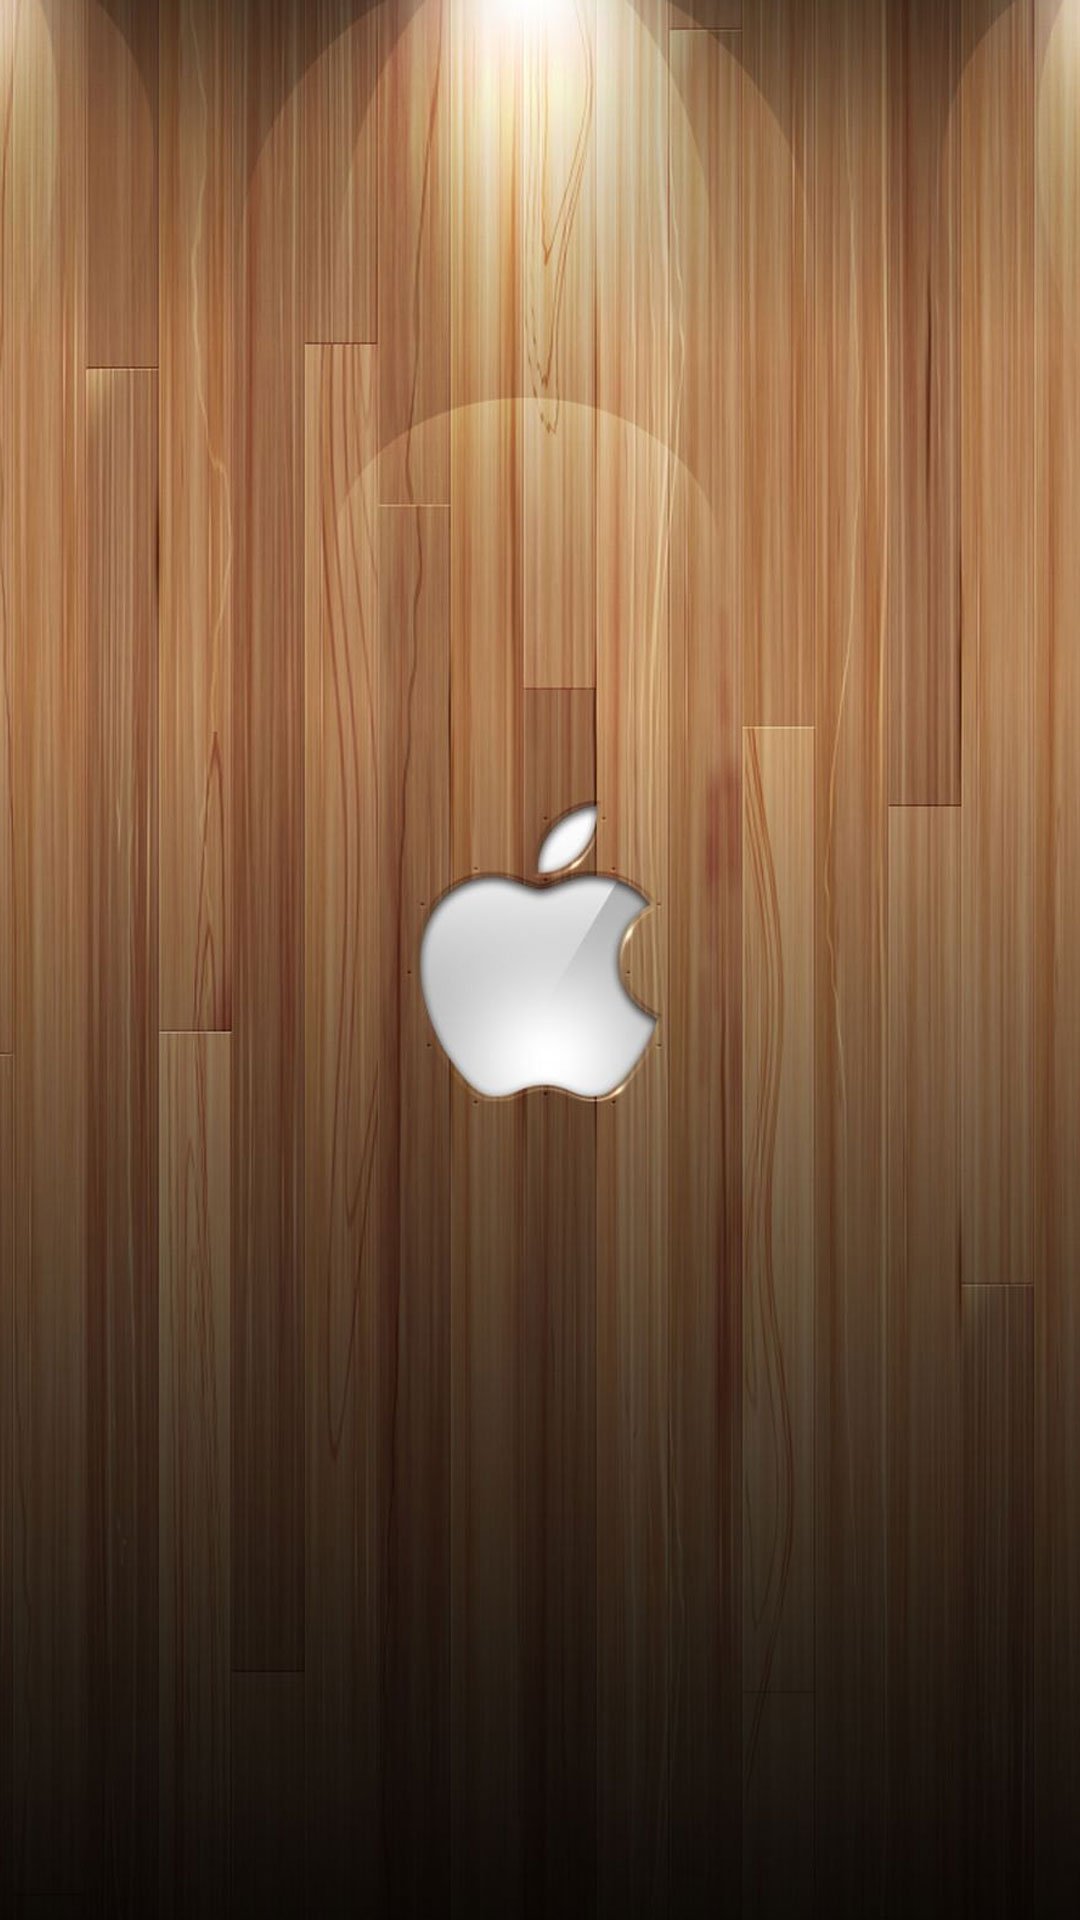  uploads201409Beautiful Apple iPhone 6 Plus Wallpaper Retina1jpg